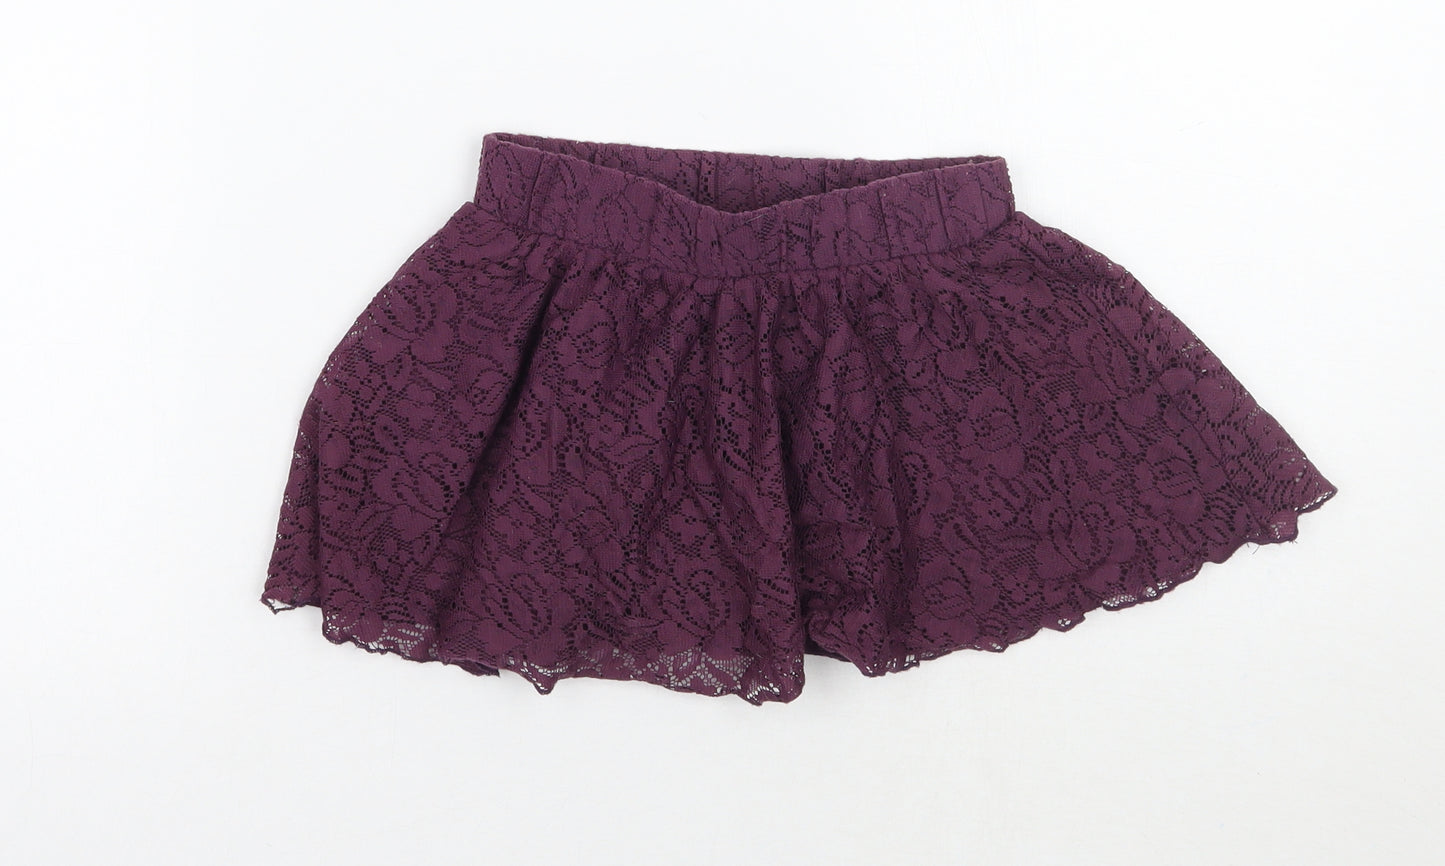 Terranova Girls Purple   A-Line Skirt Size 4-5 Years